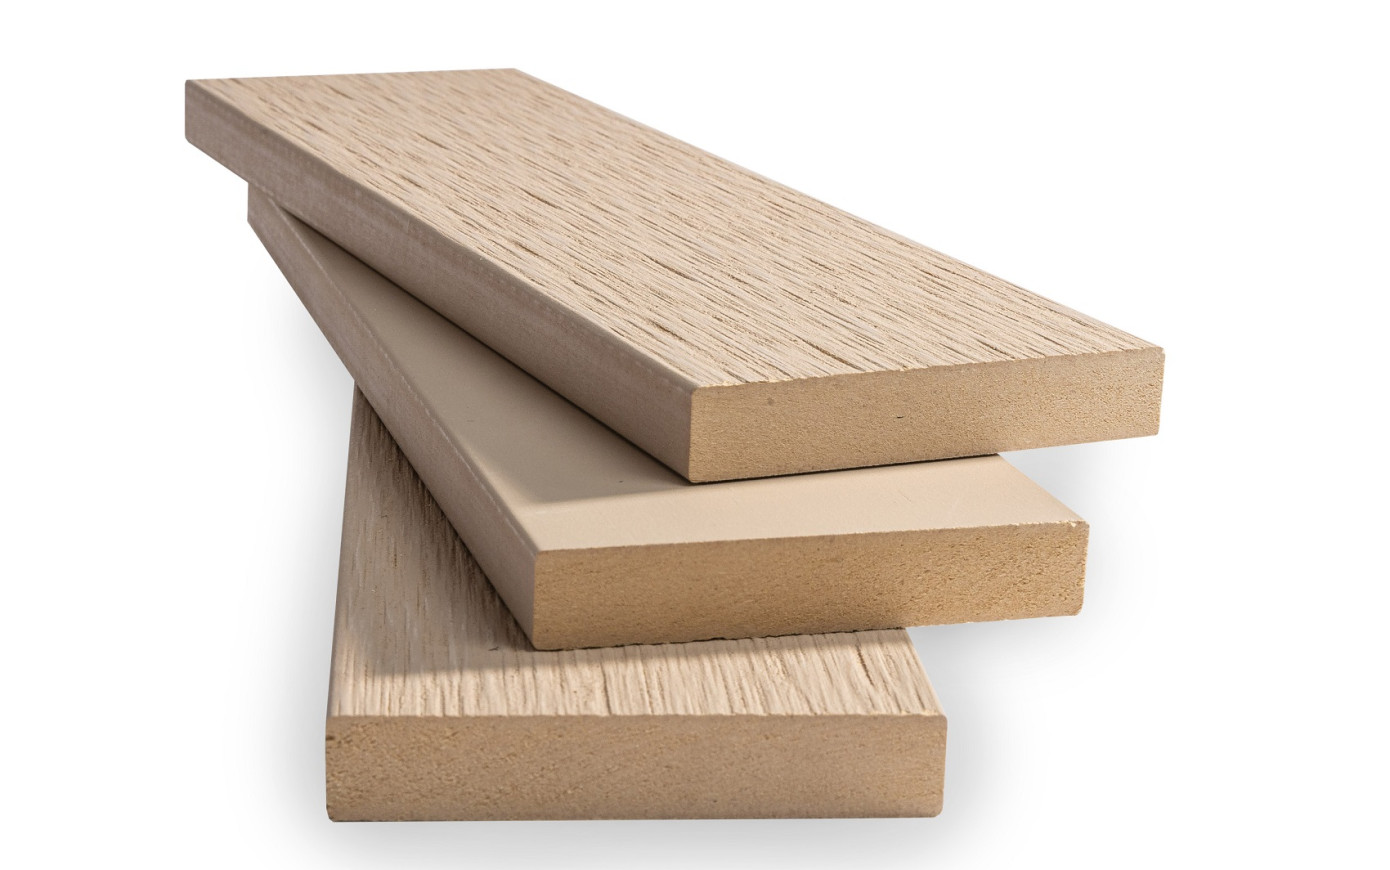 Roseburg introduces new exterior wood trim